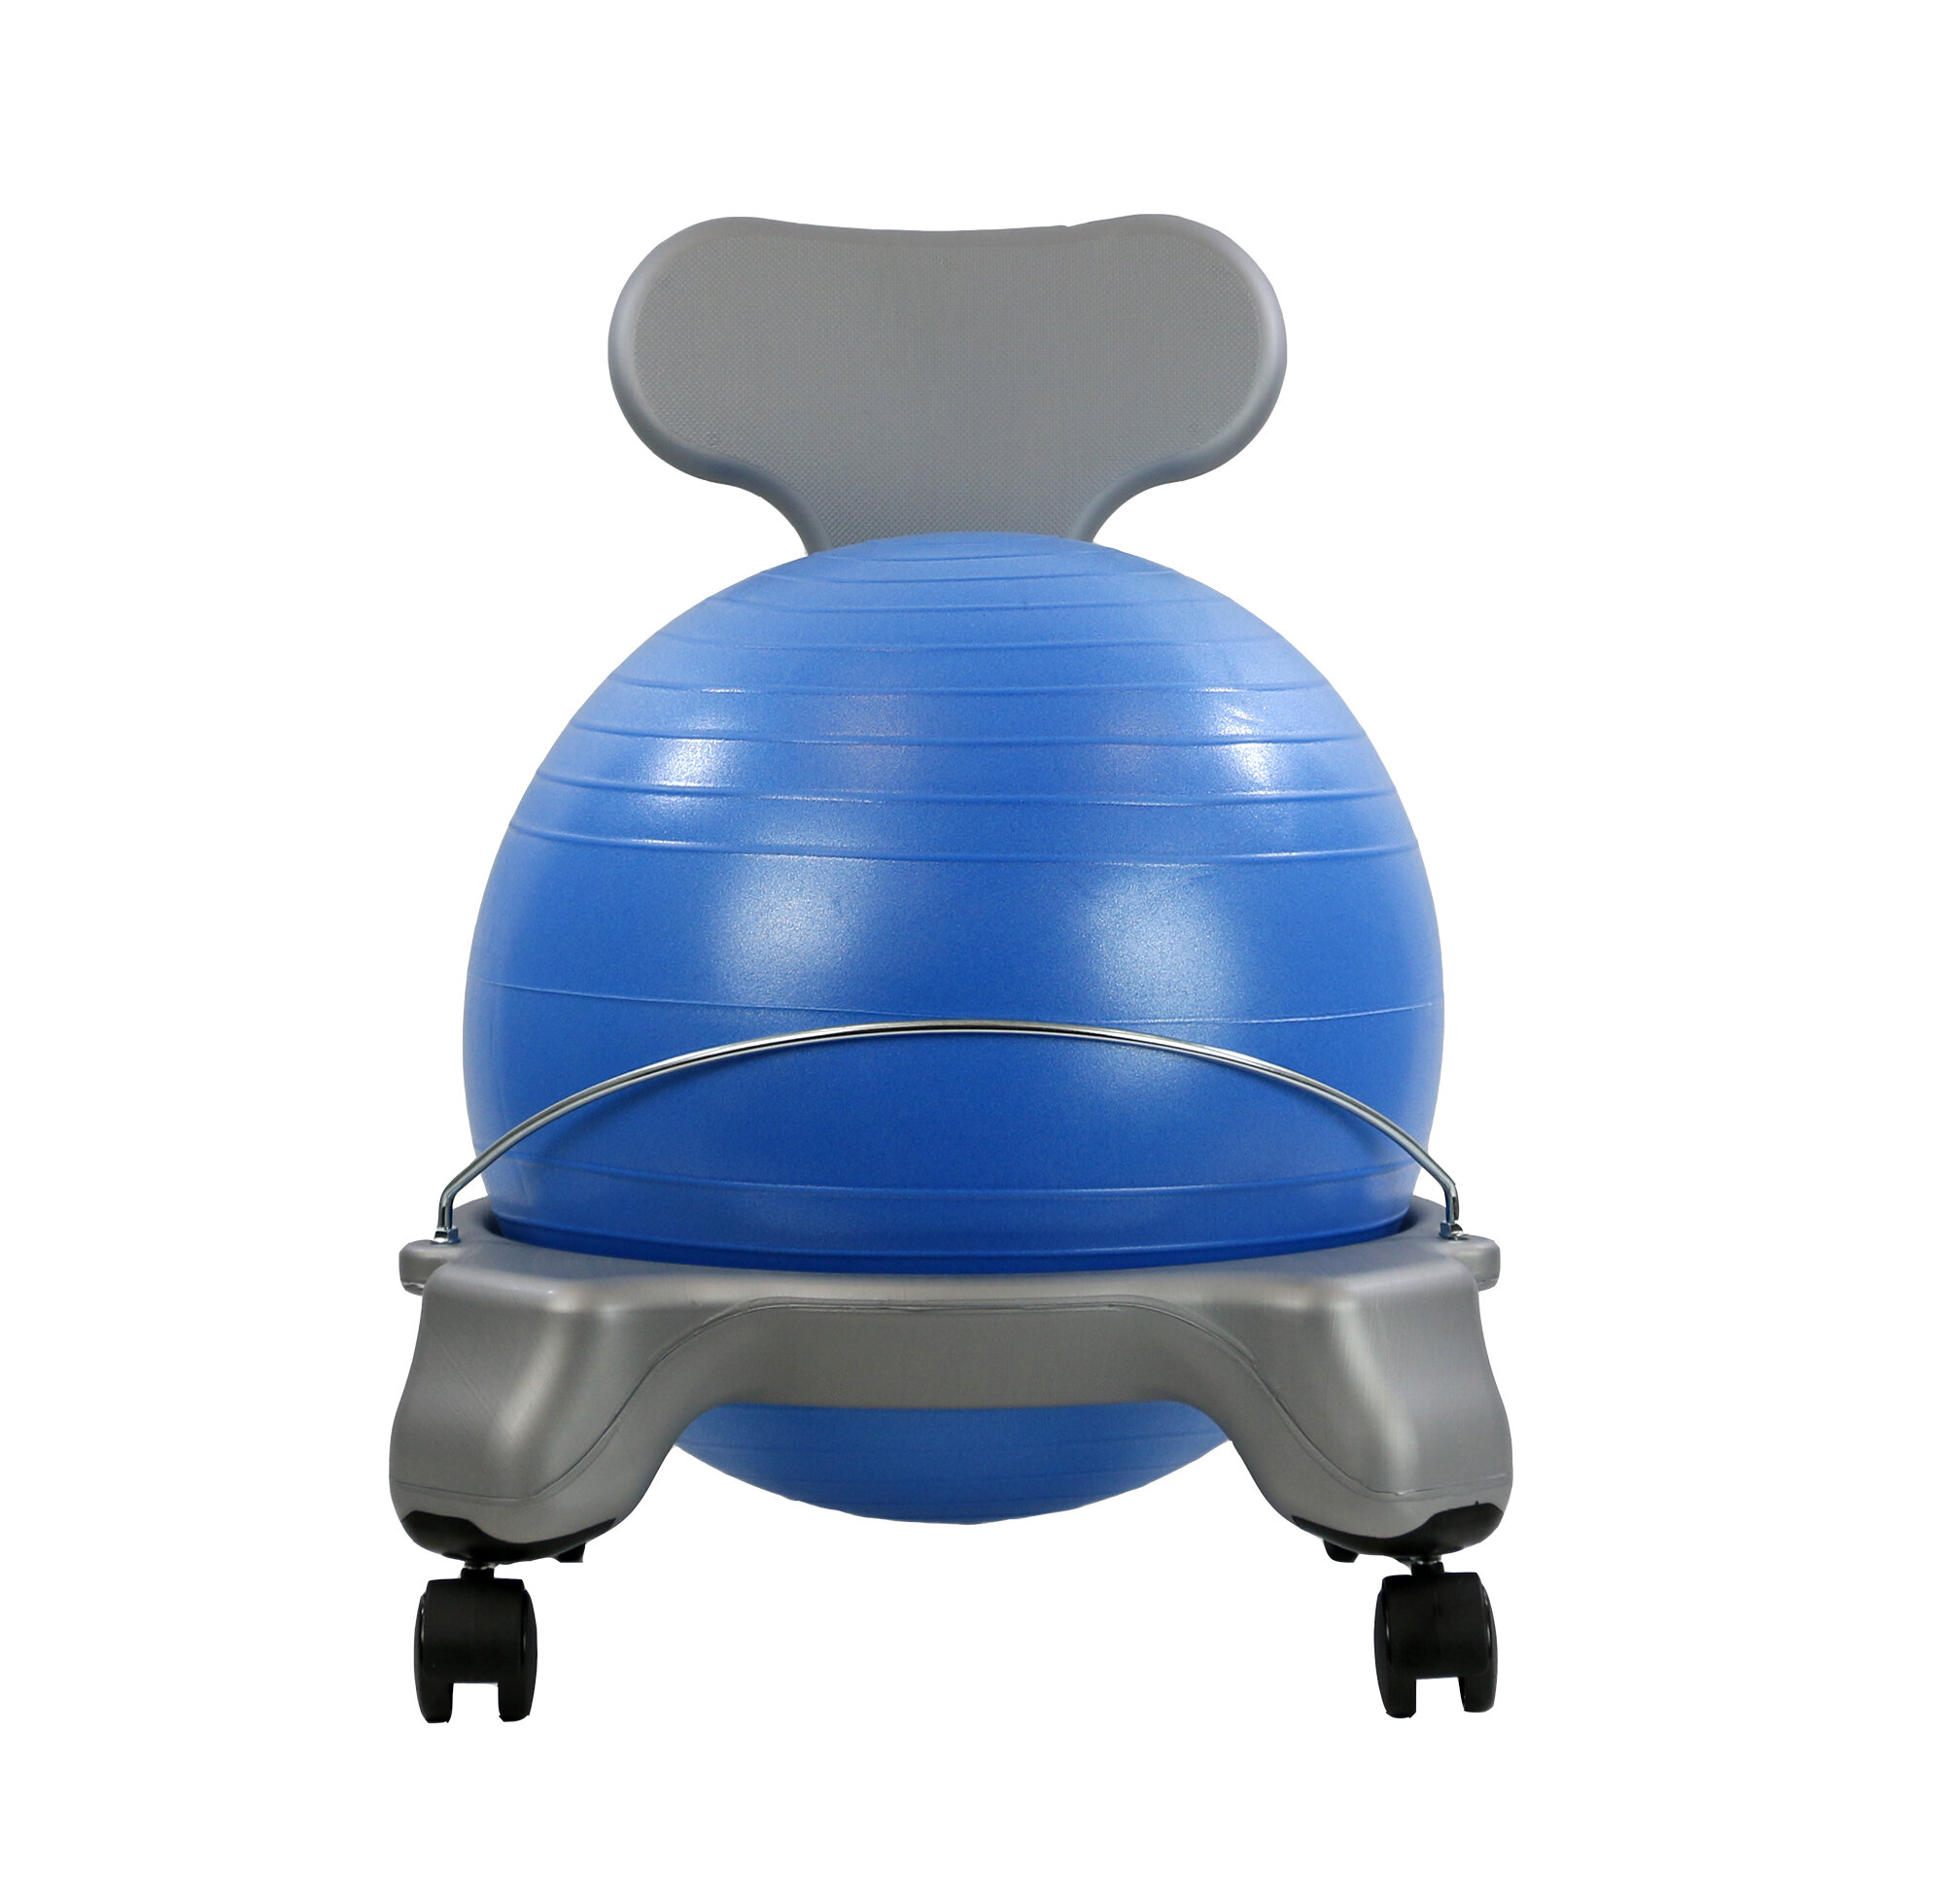 exercise ball chair